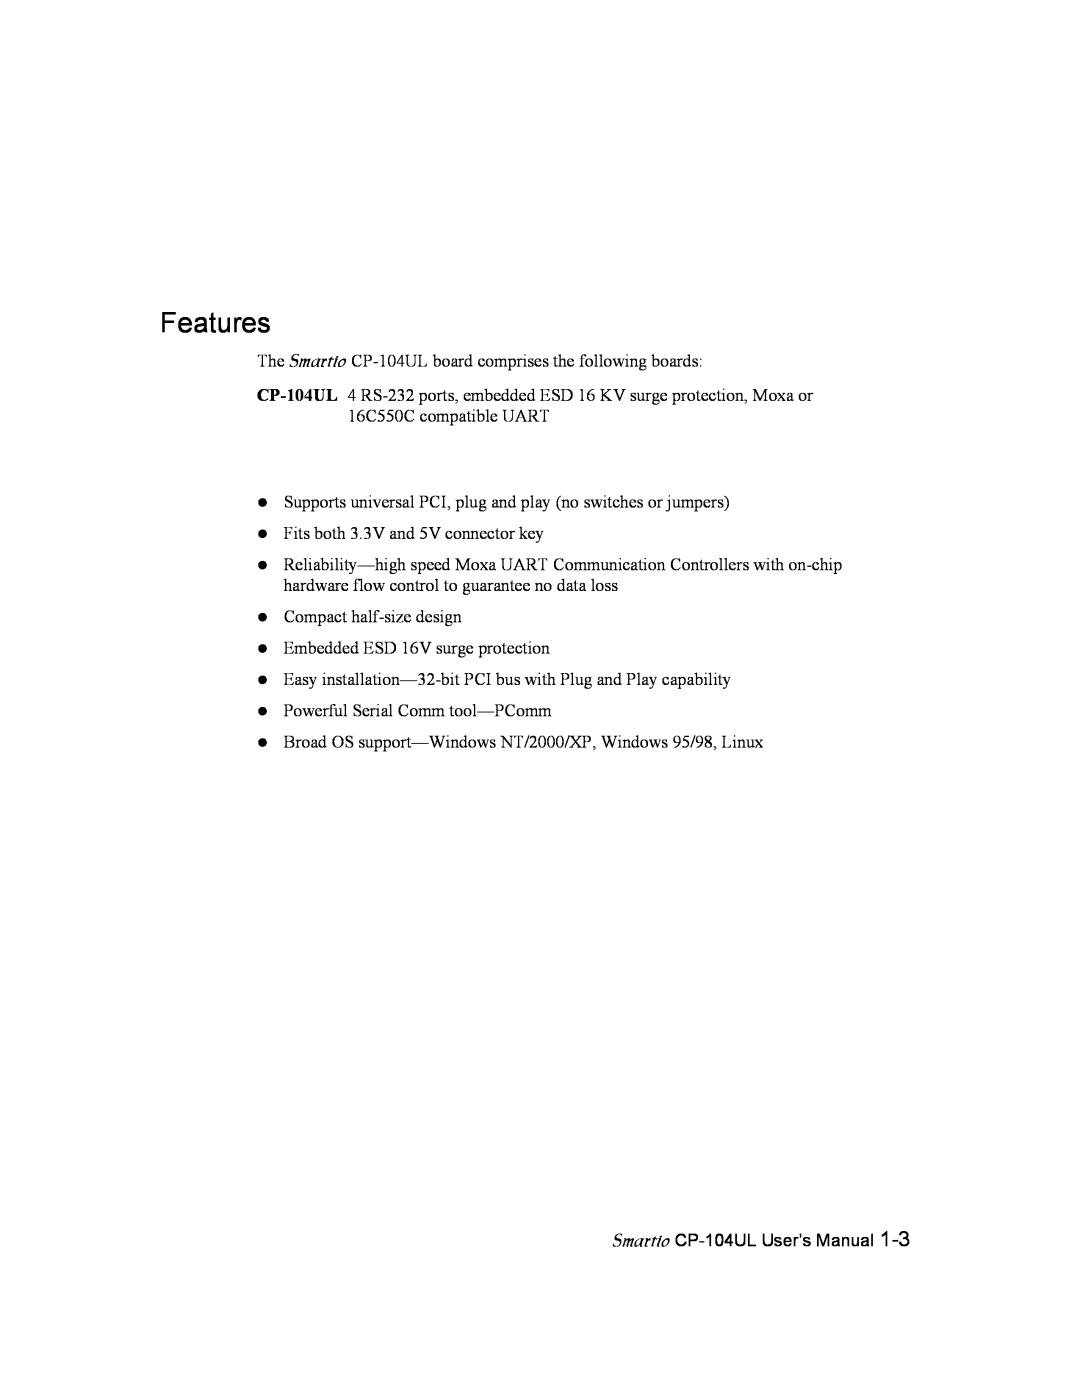 Moxa Technologies user manual Features, Smartio CP-104UL User’s Manual 